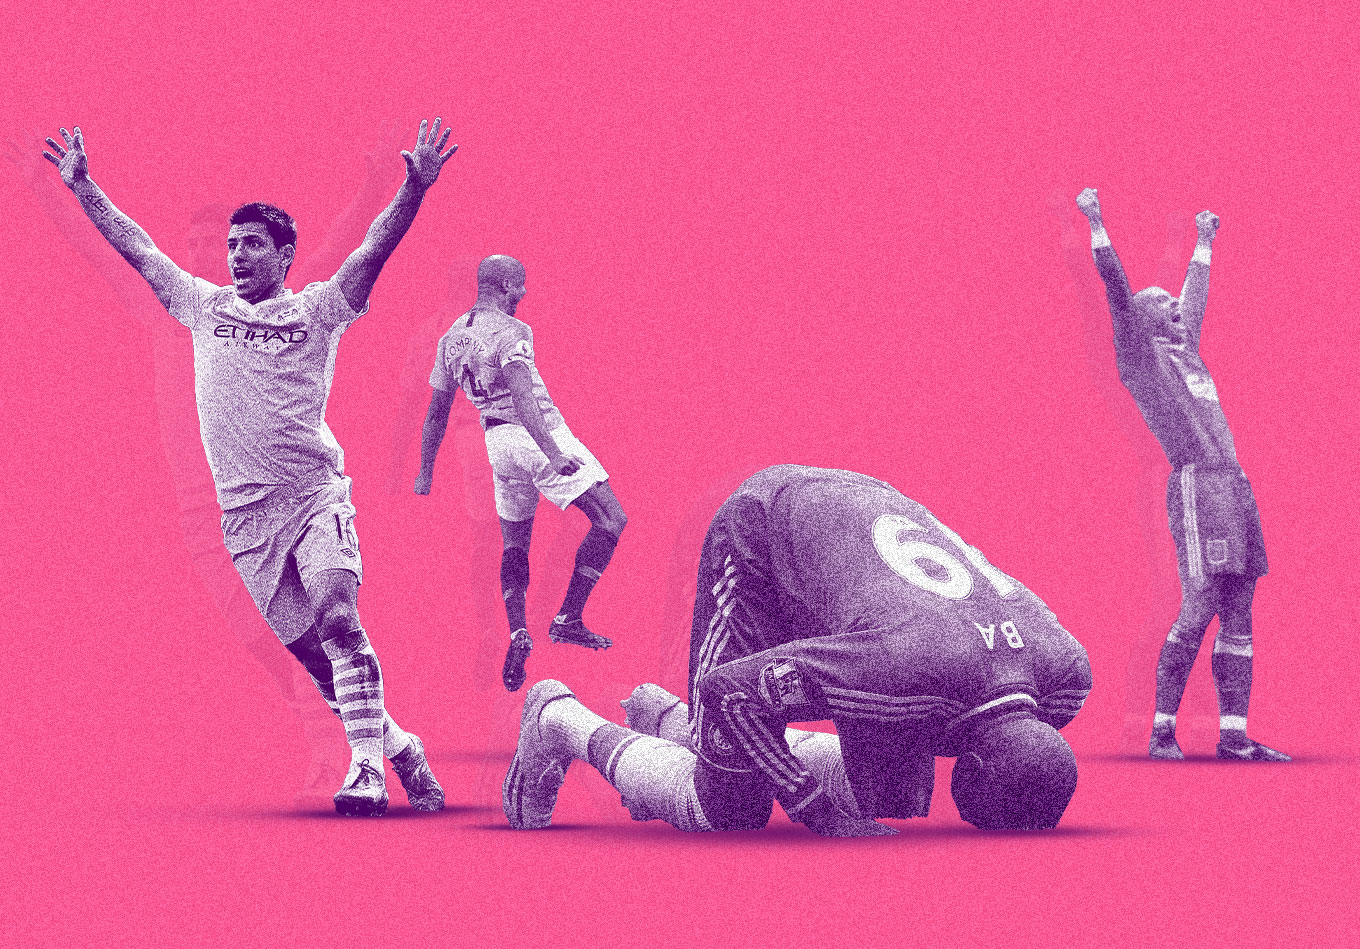 The Most Decisive Goals in Premier League History